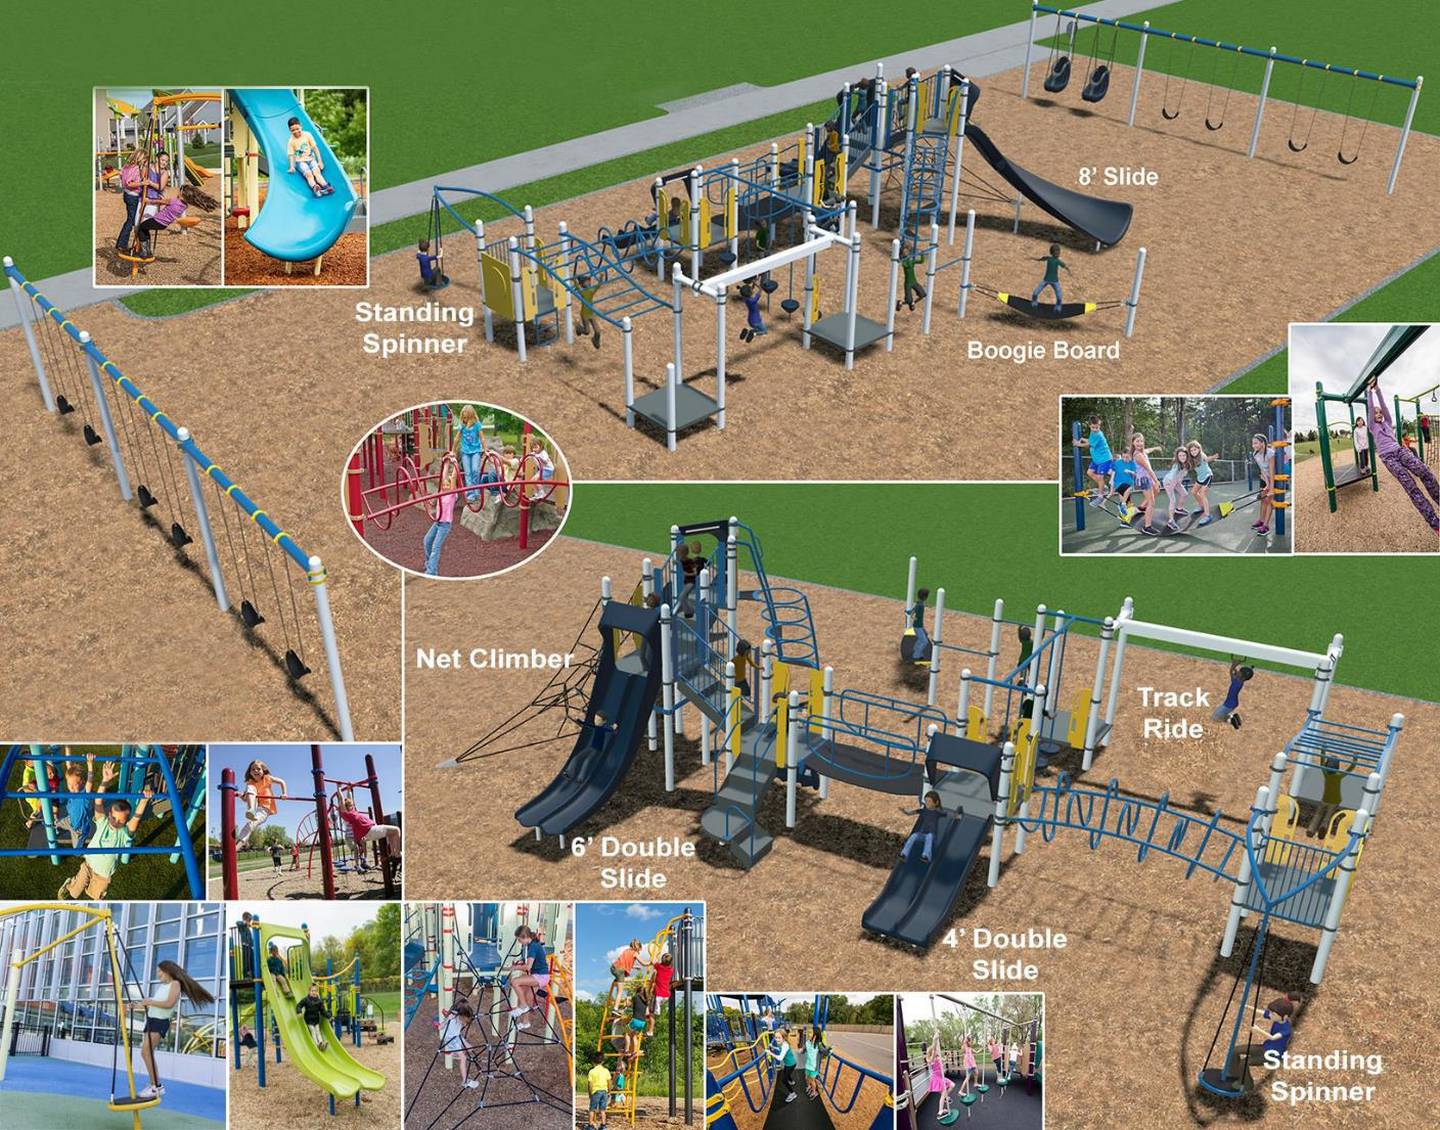 New playground planned for Edgewood Elementary School in Woodridge in 2023.